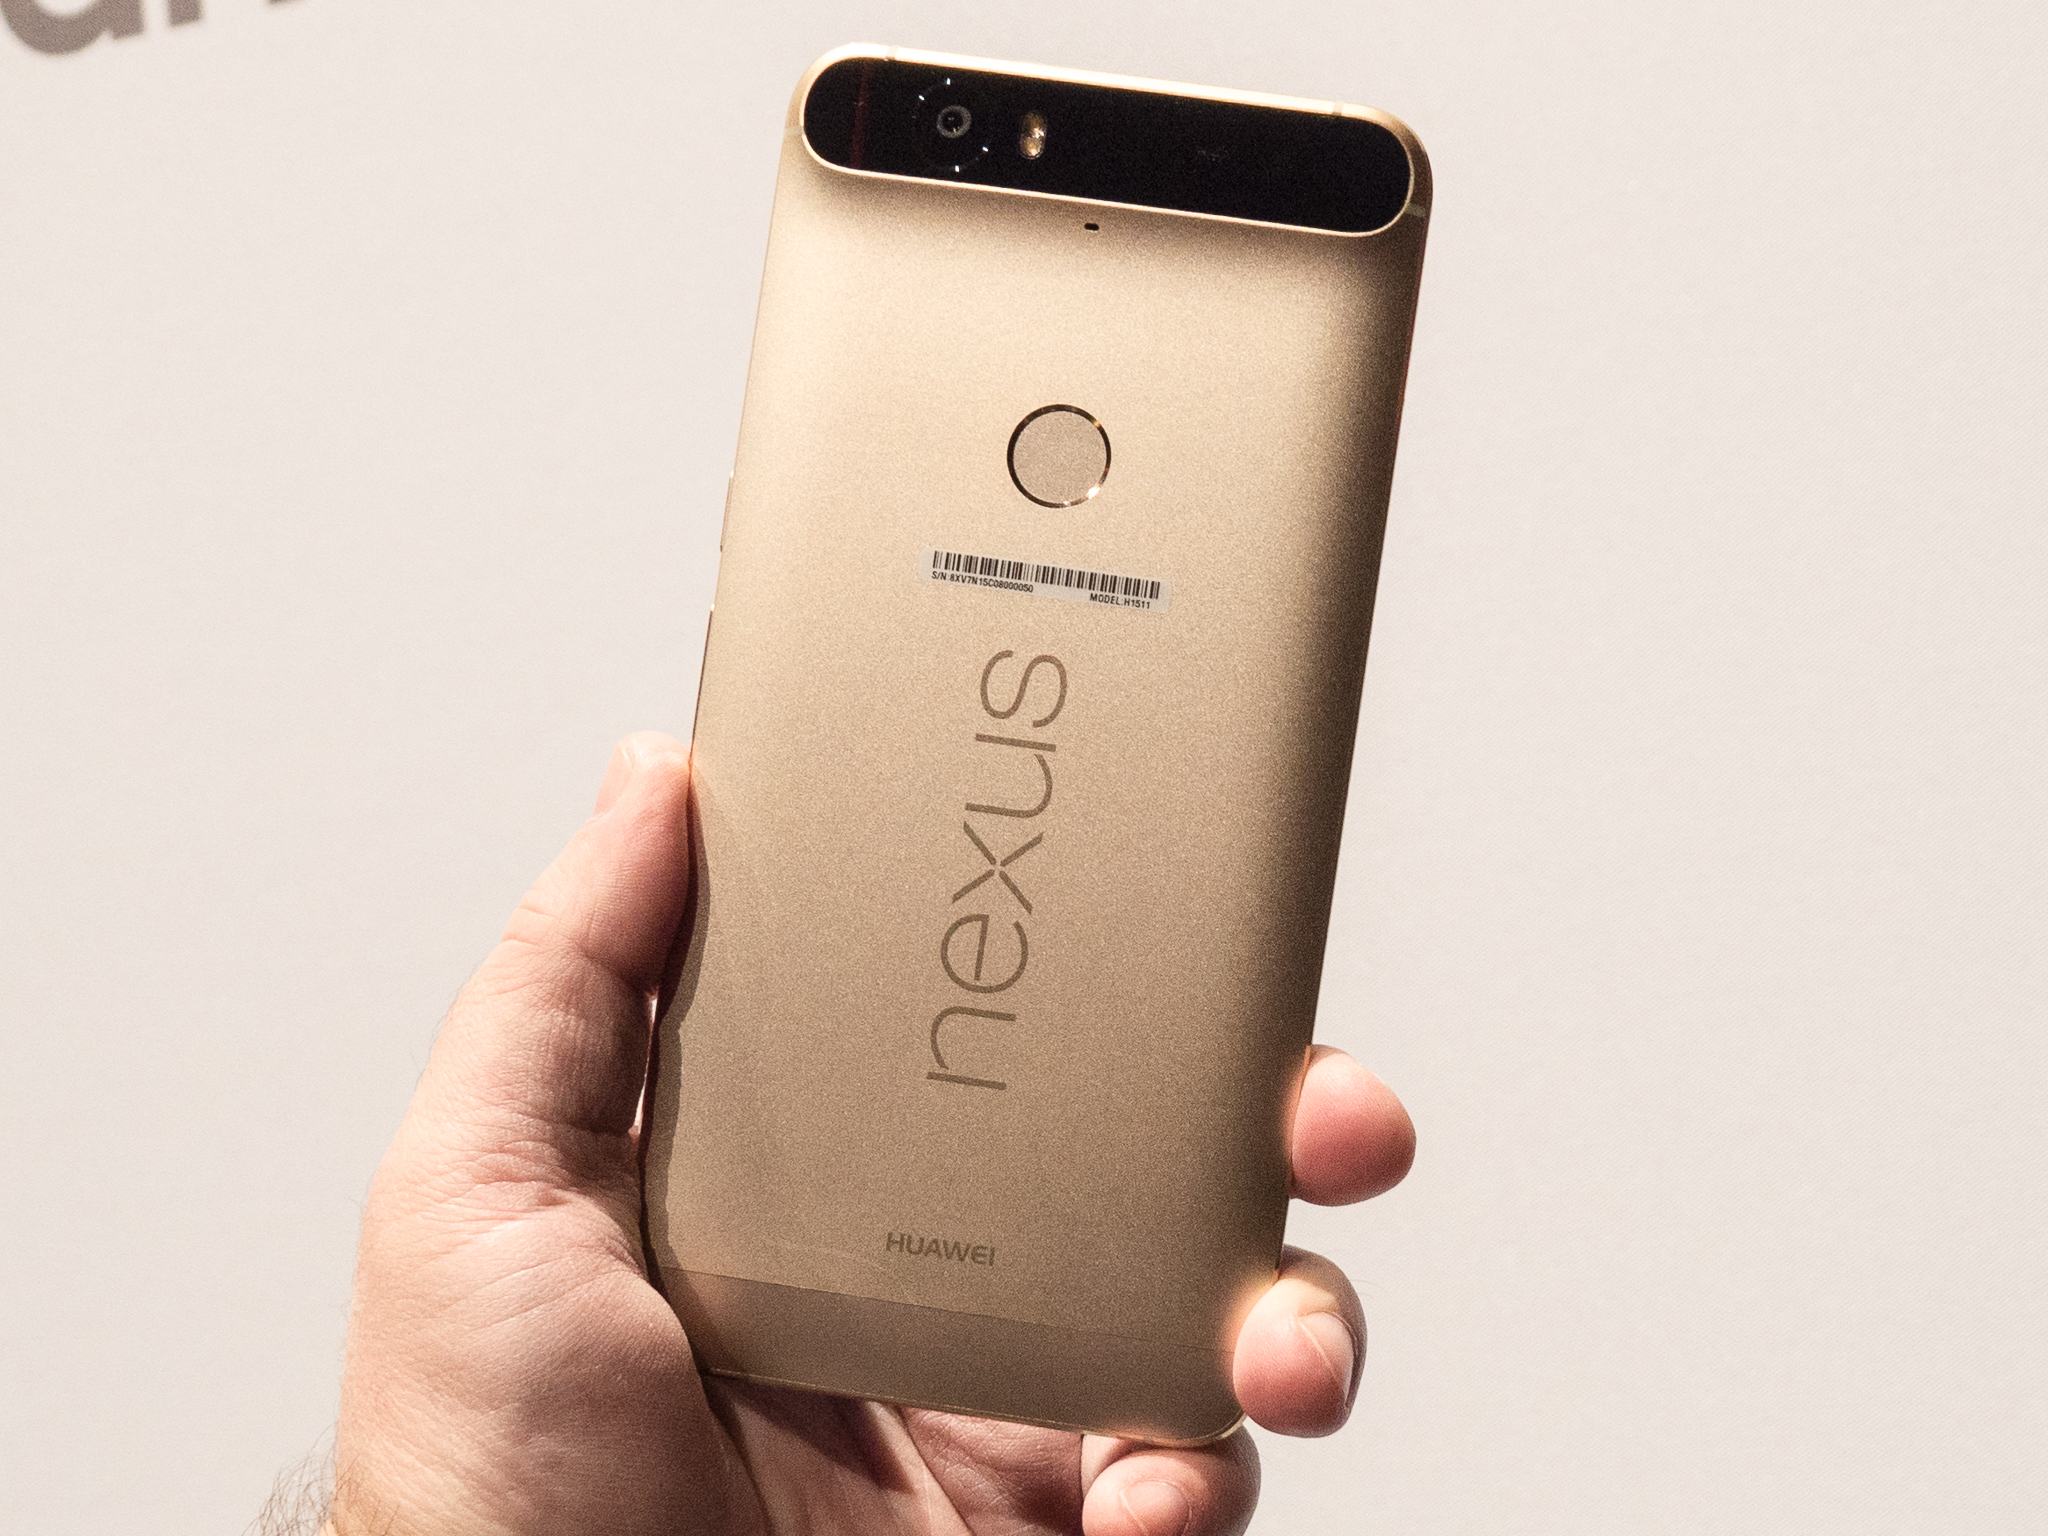 Nexus 6P gold colorway